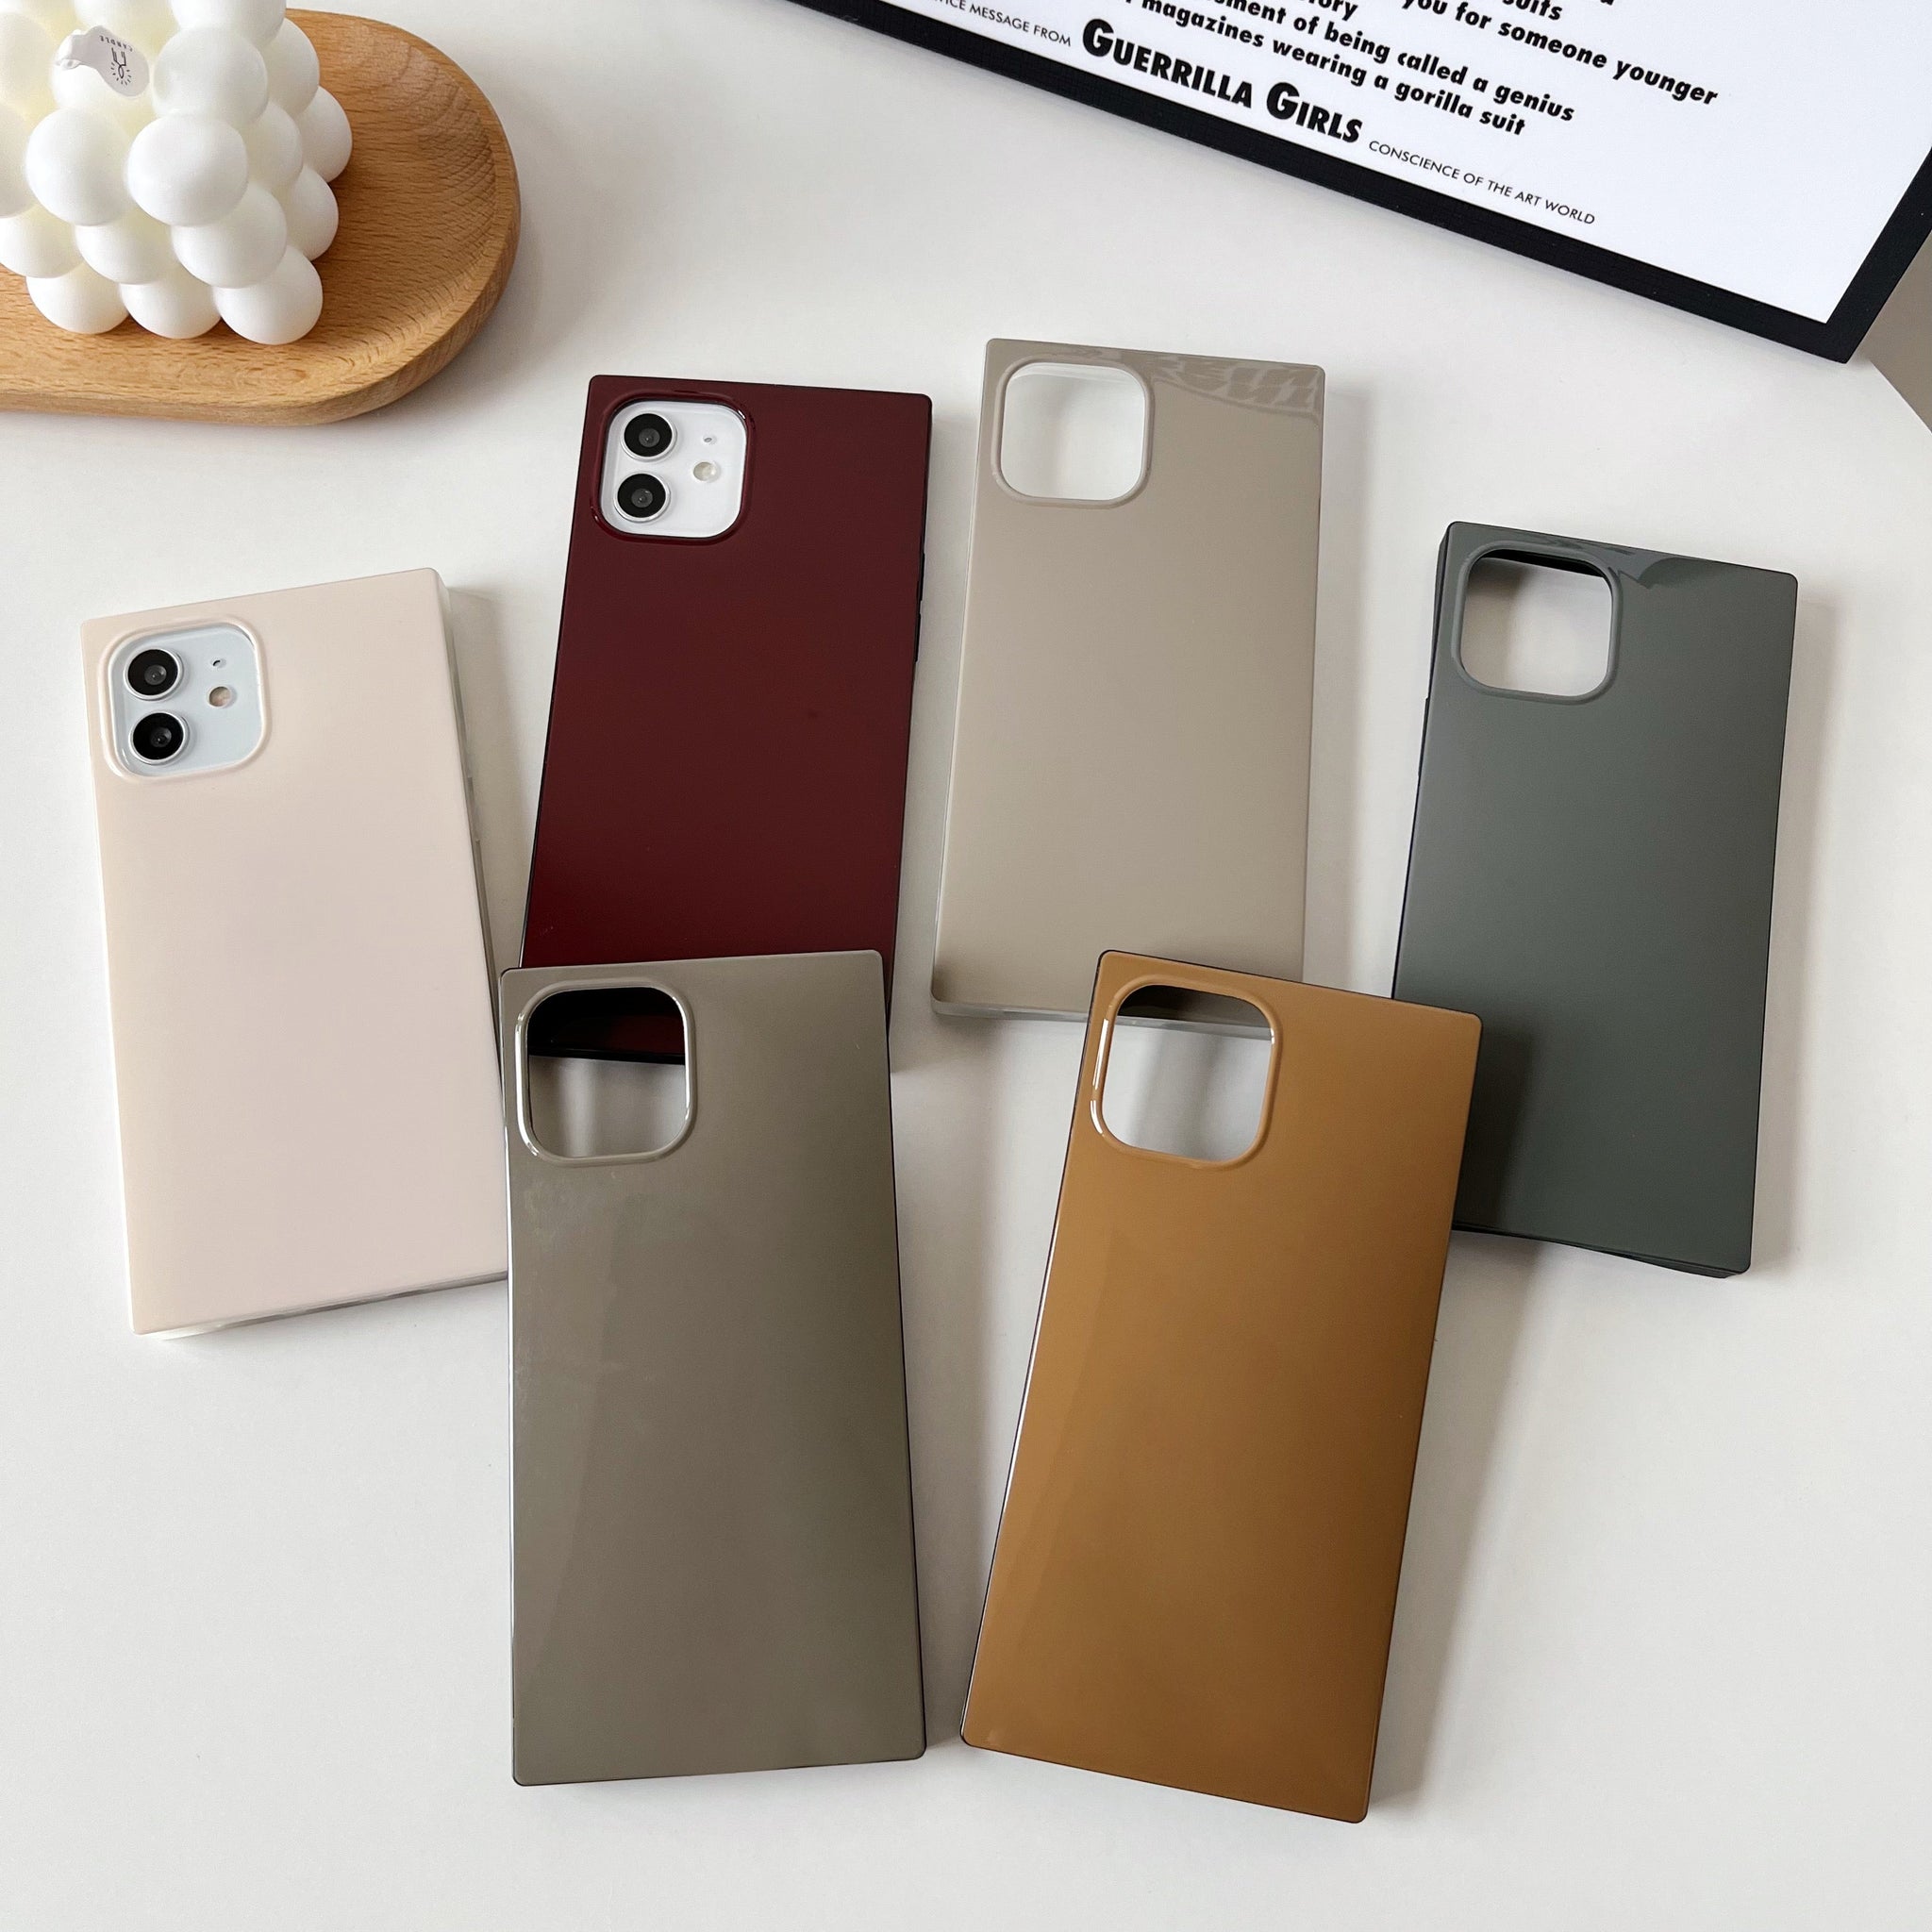 iPhone 11 Pro Max Case Square Neutral Plain Color (Elephant Gray)